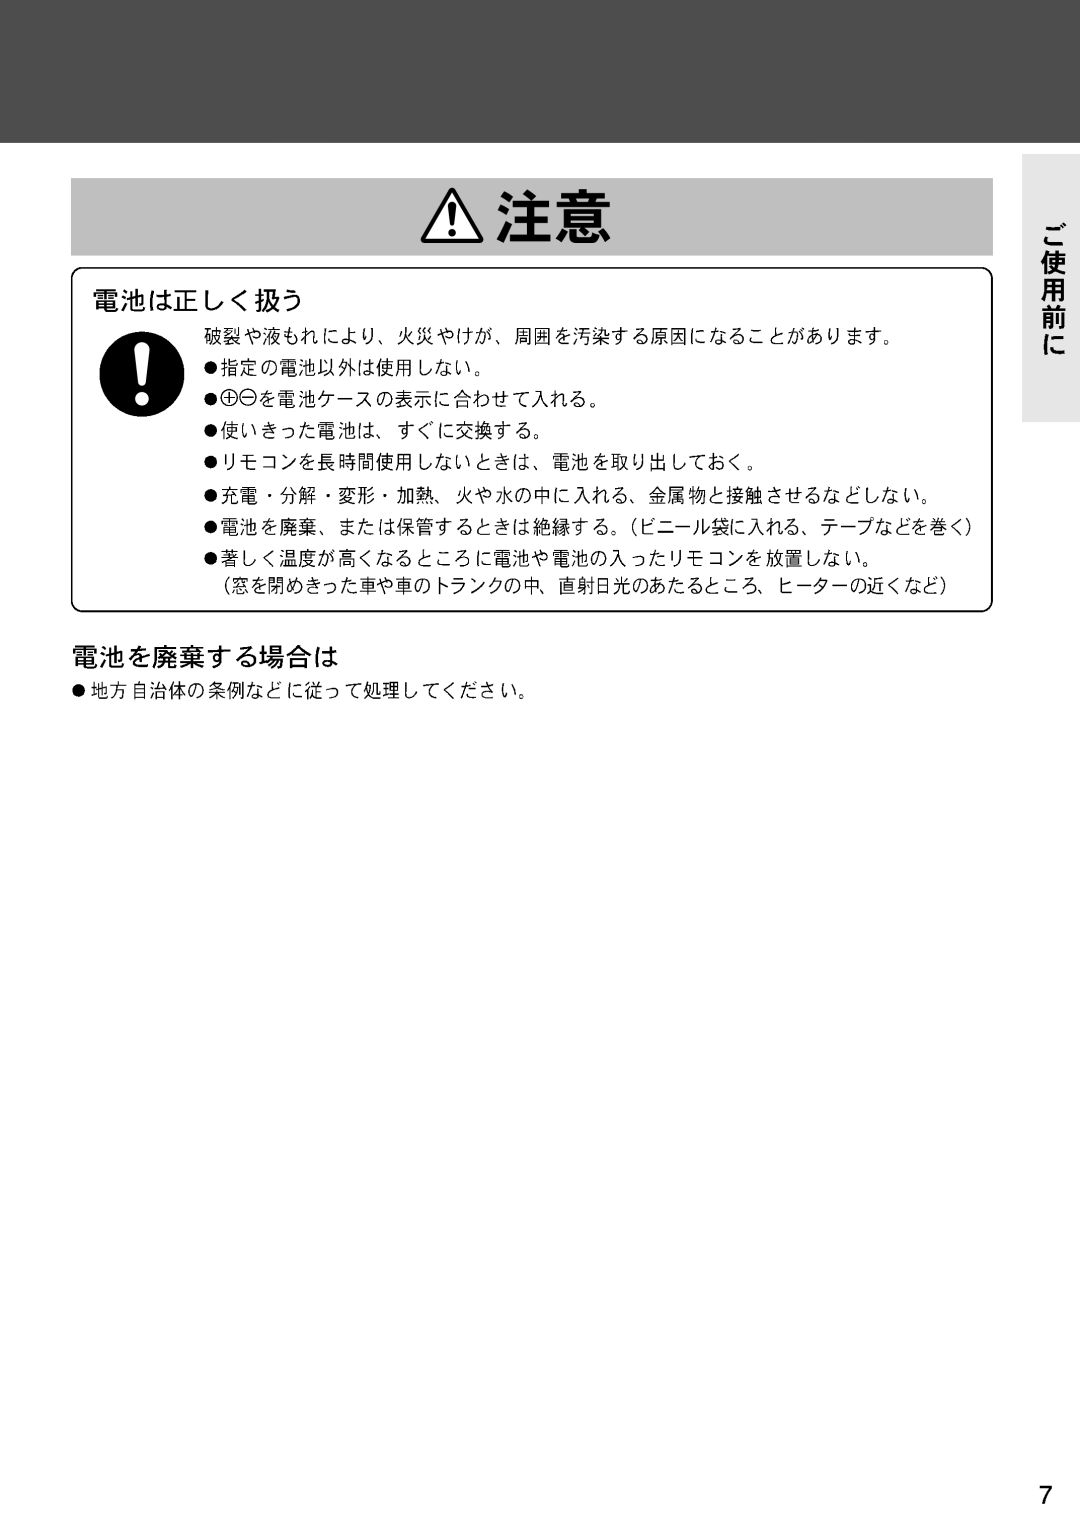 Panasonic CQ-VX3300D manual 